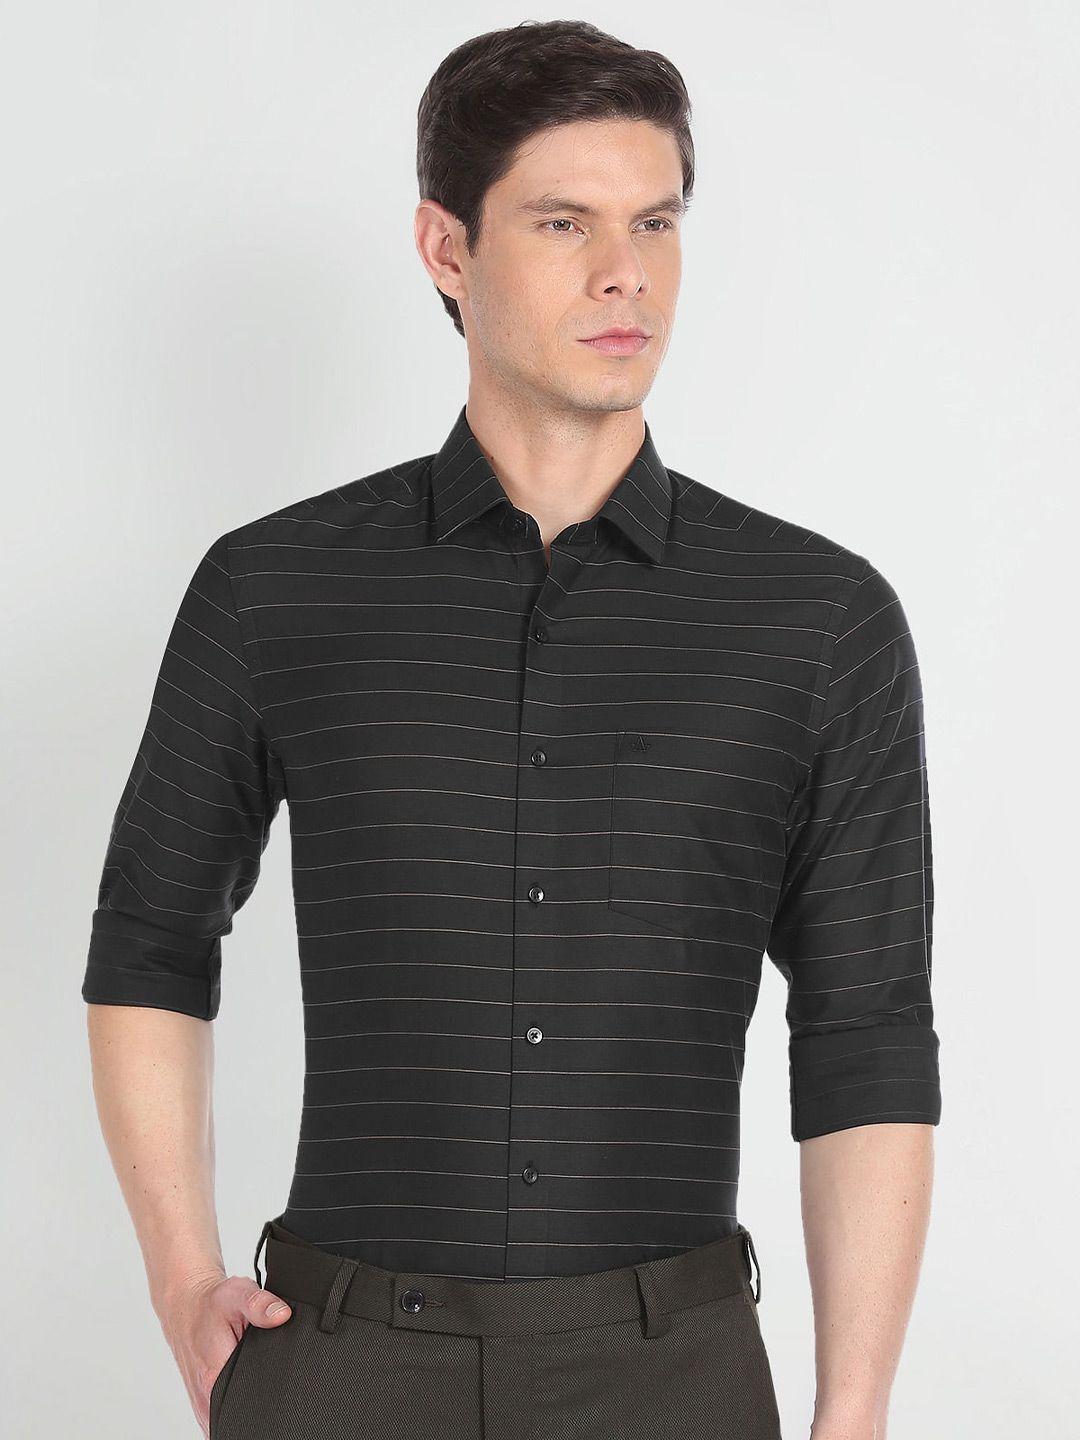 arrow horizontal striped twill pure cotton formal shirt